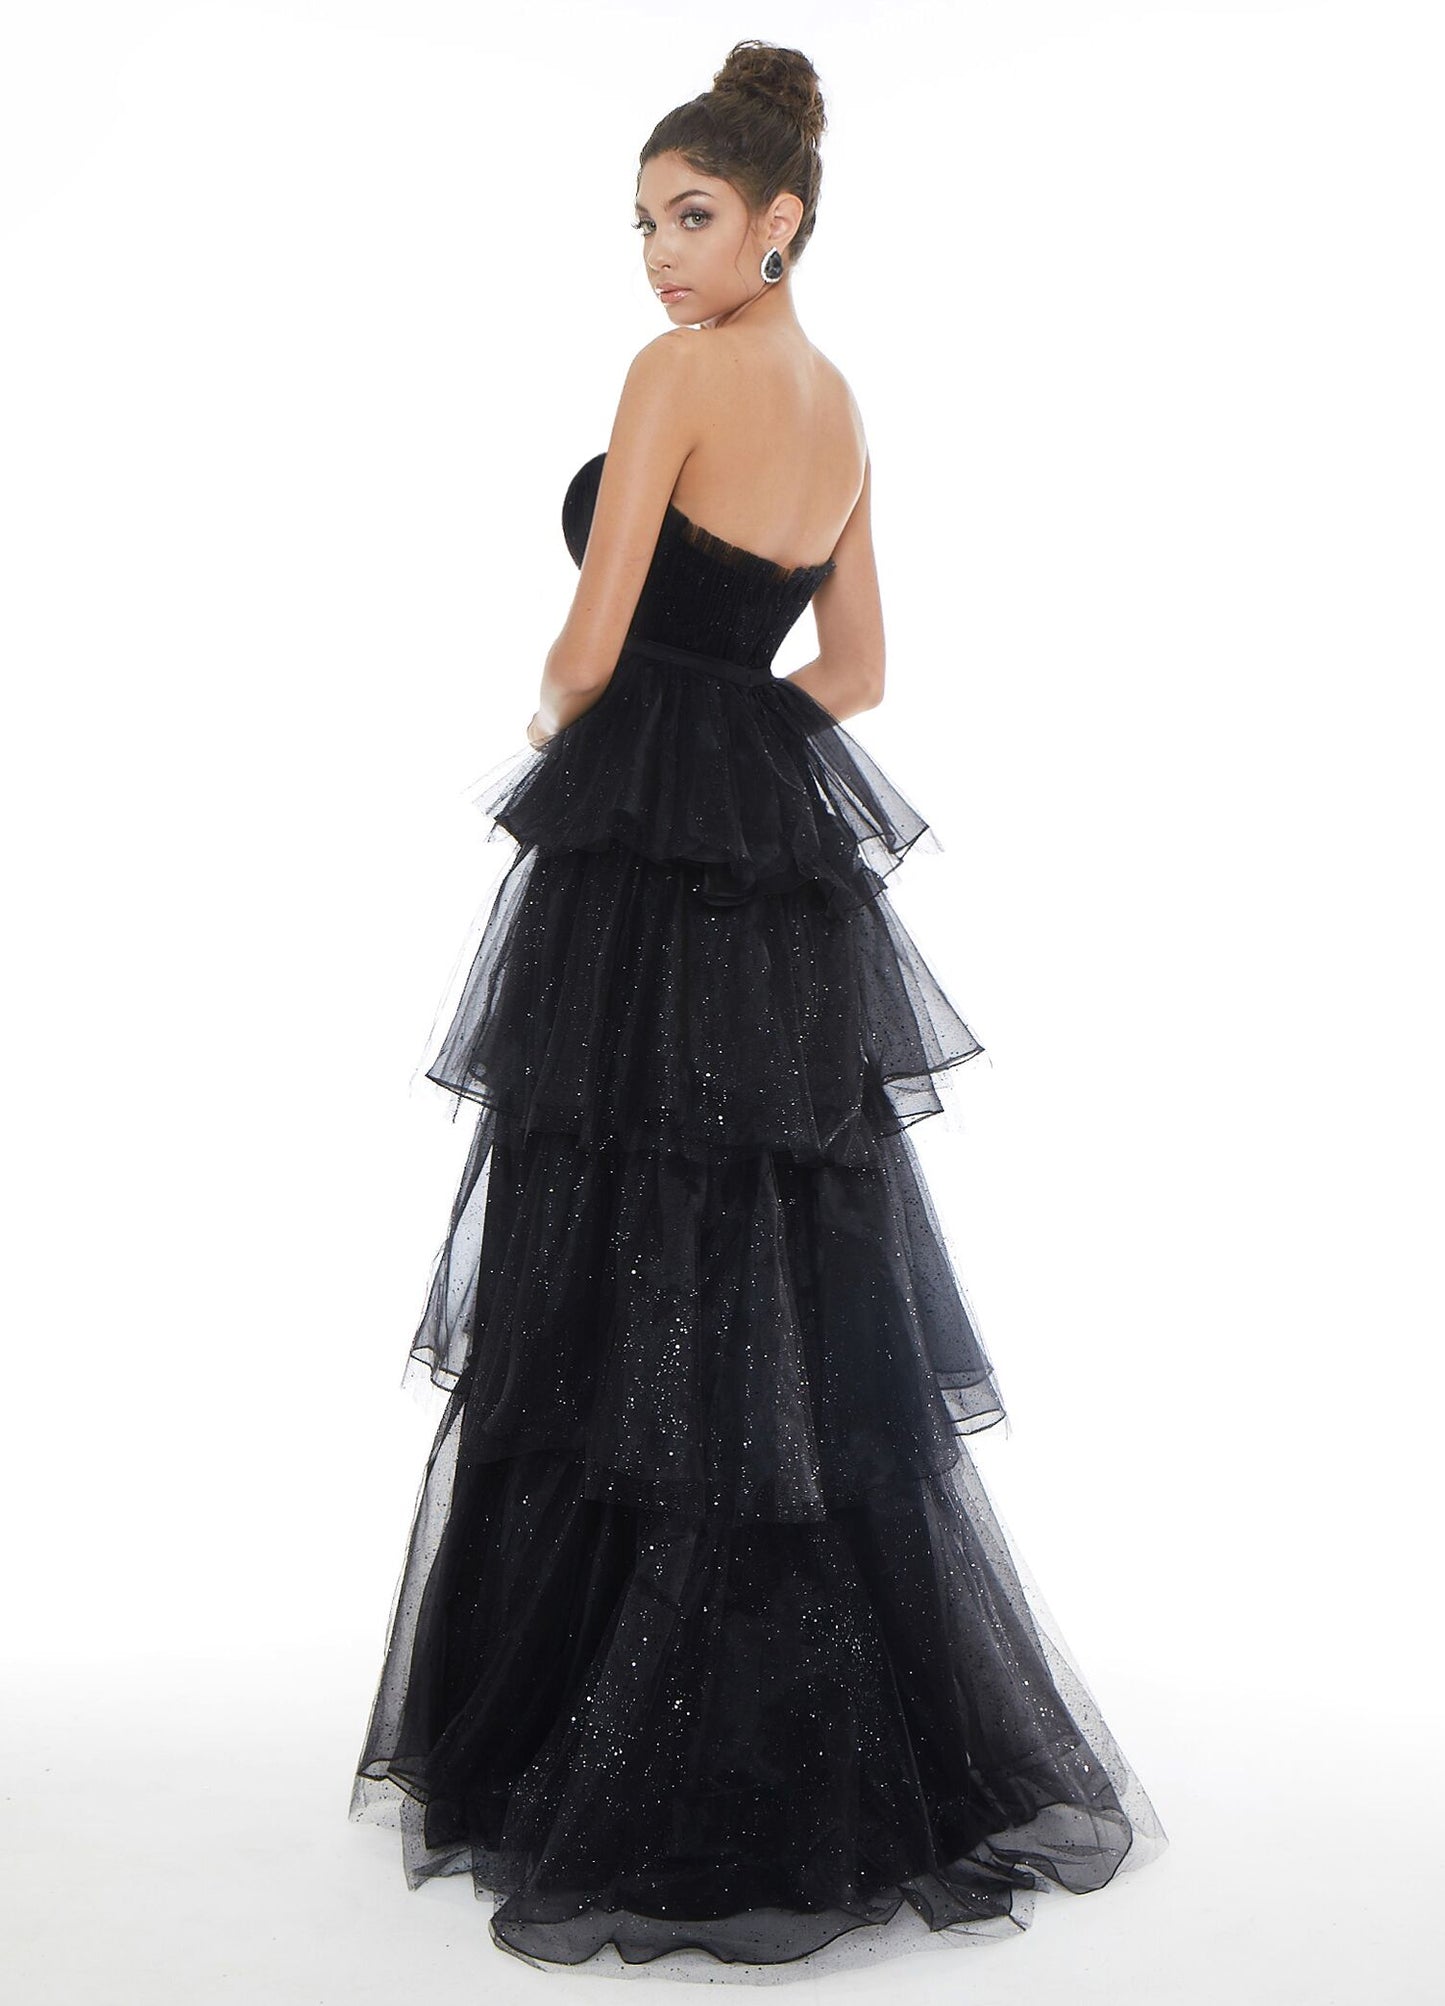 Ashley Lauren 1709 Glass Slipper Formals Lake City Florida Black Prom Dress Back View Formal Evening Dresses